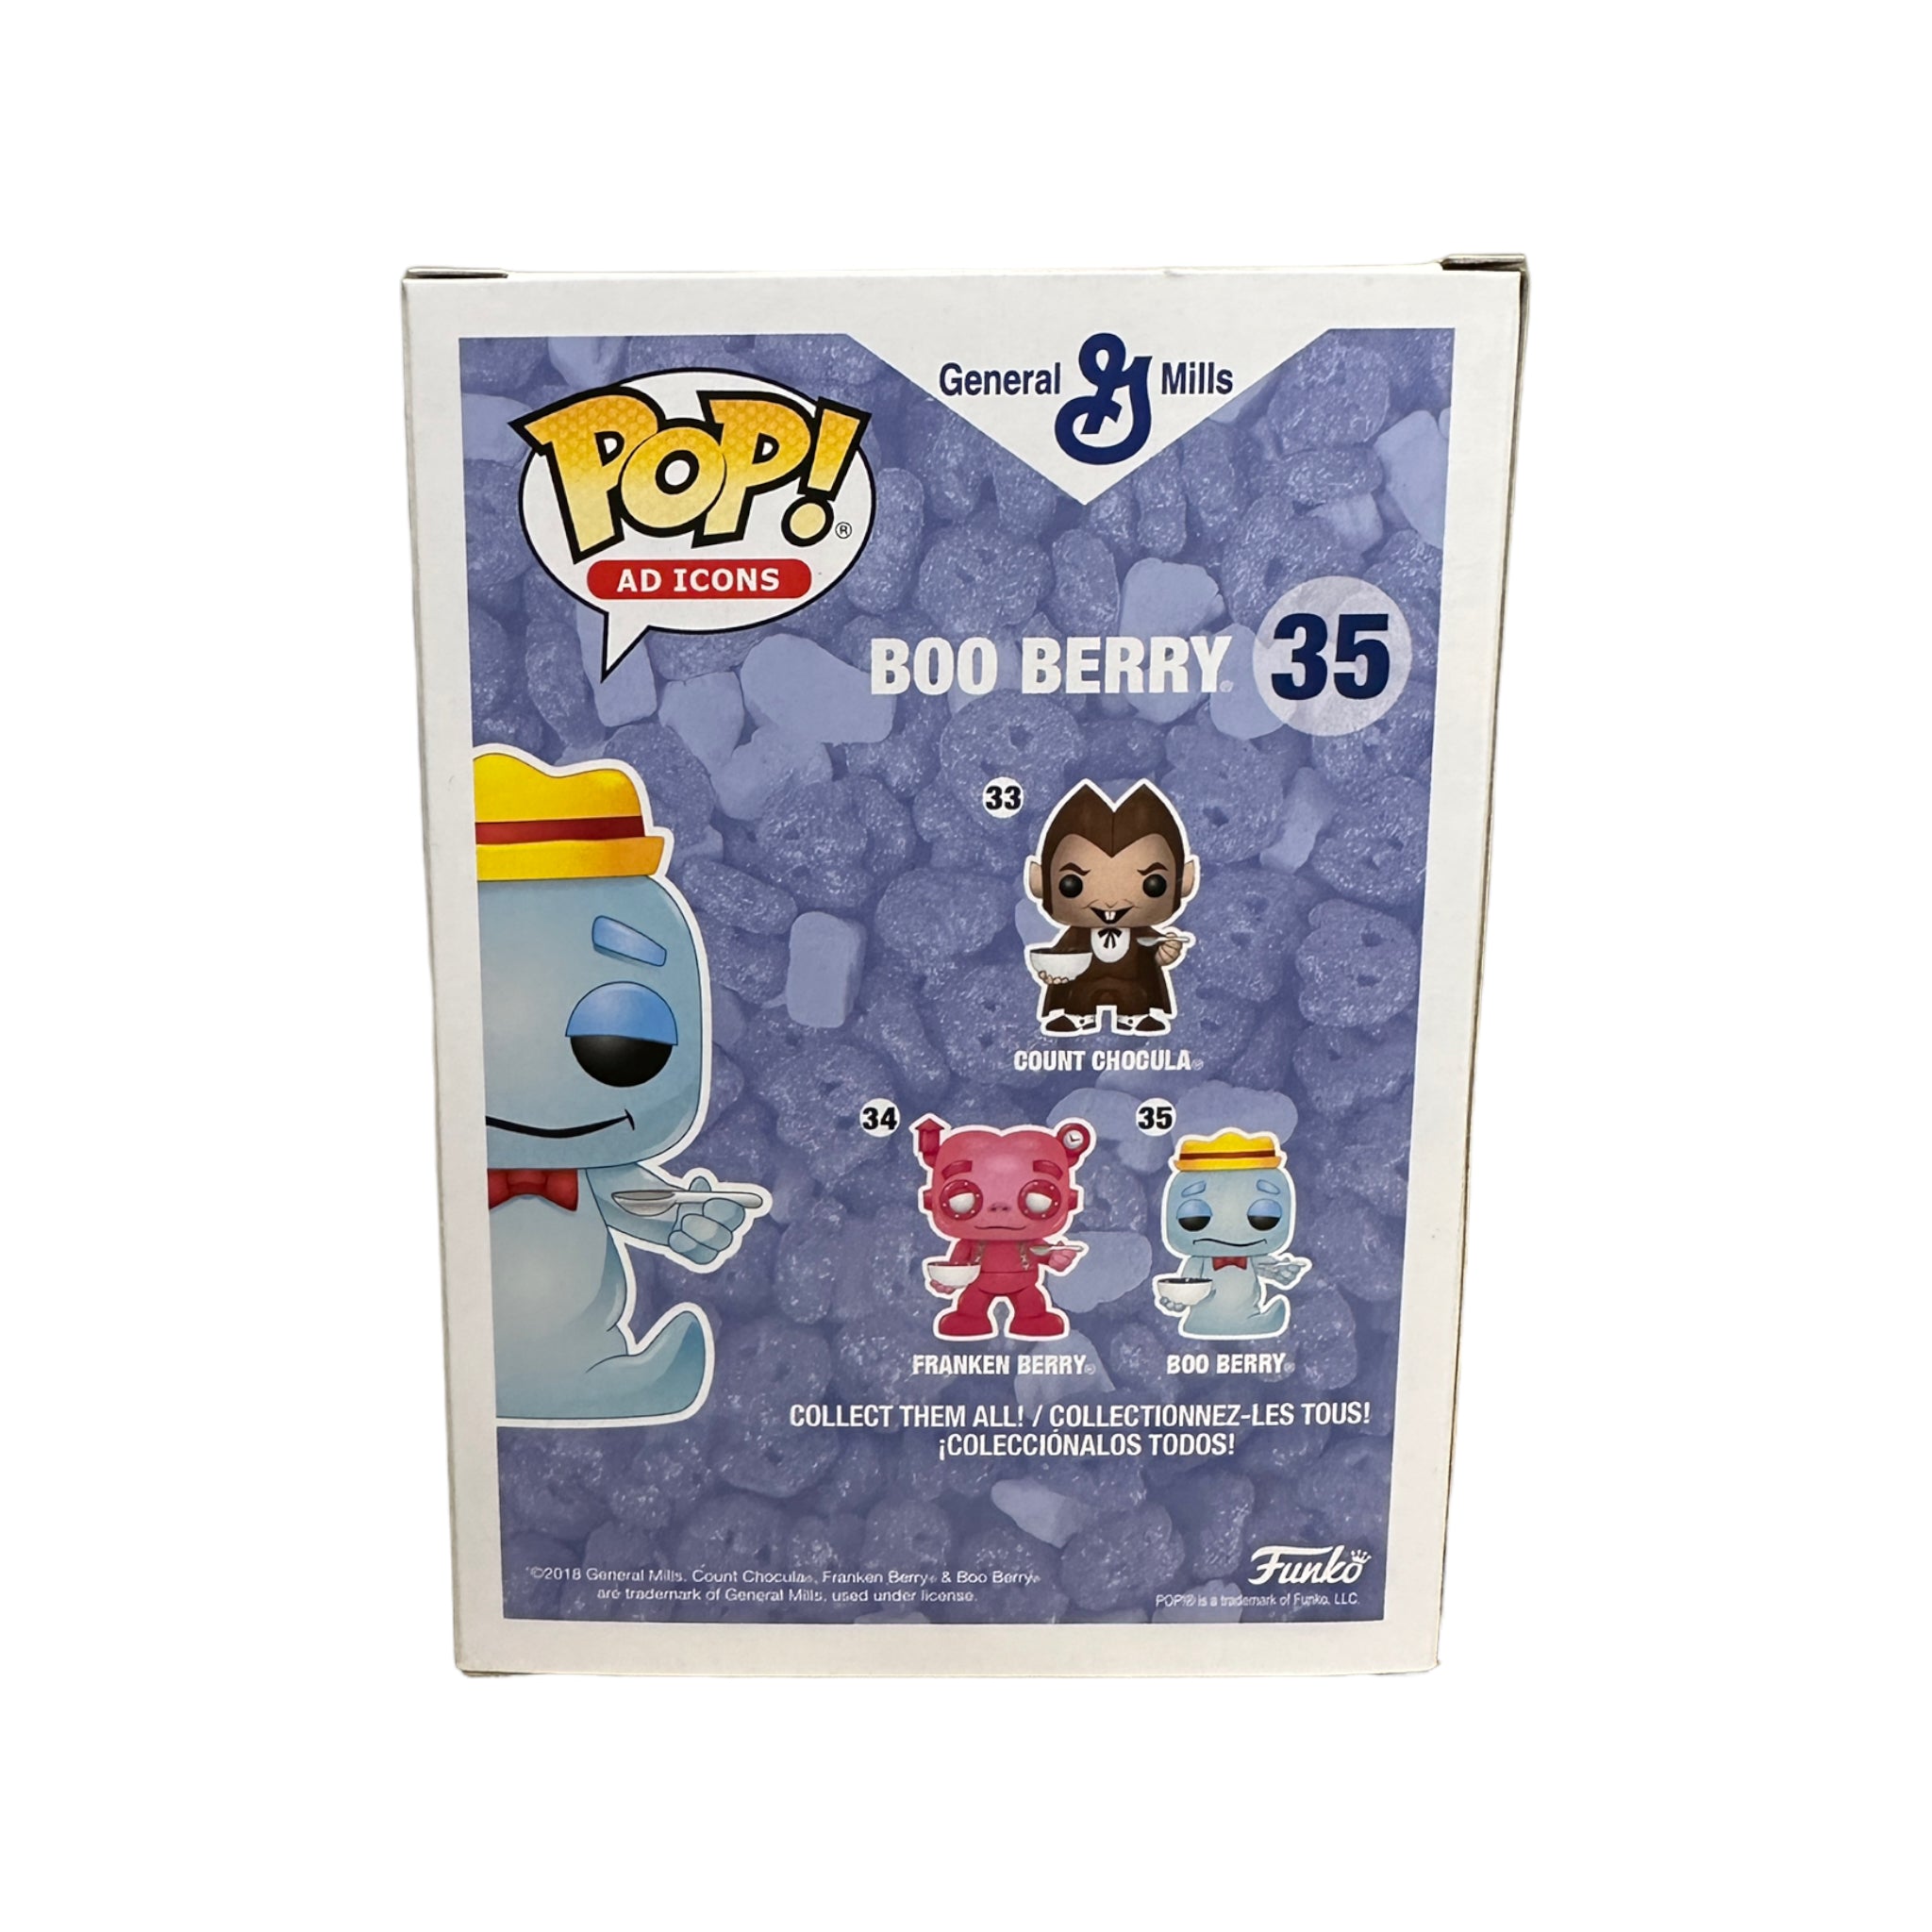 Boo Berry #35 (w/ Cereal) Funko Pop! - Ad Icons - Funko Shop Exclusive - Condition 8/10